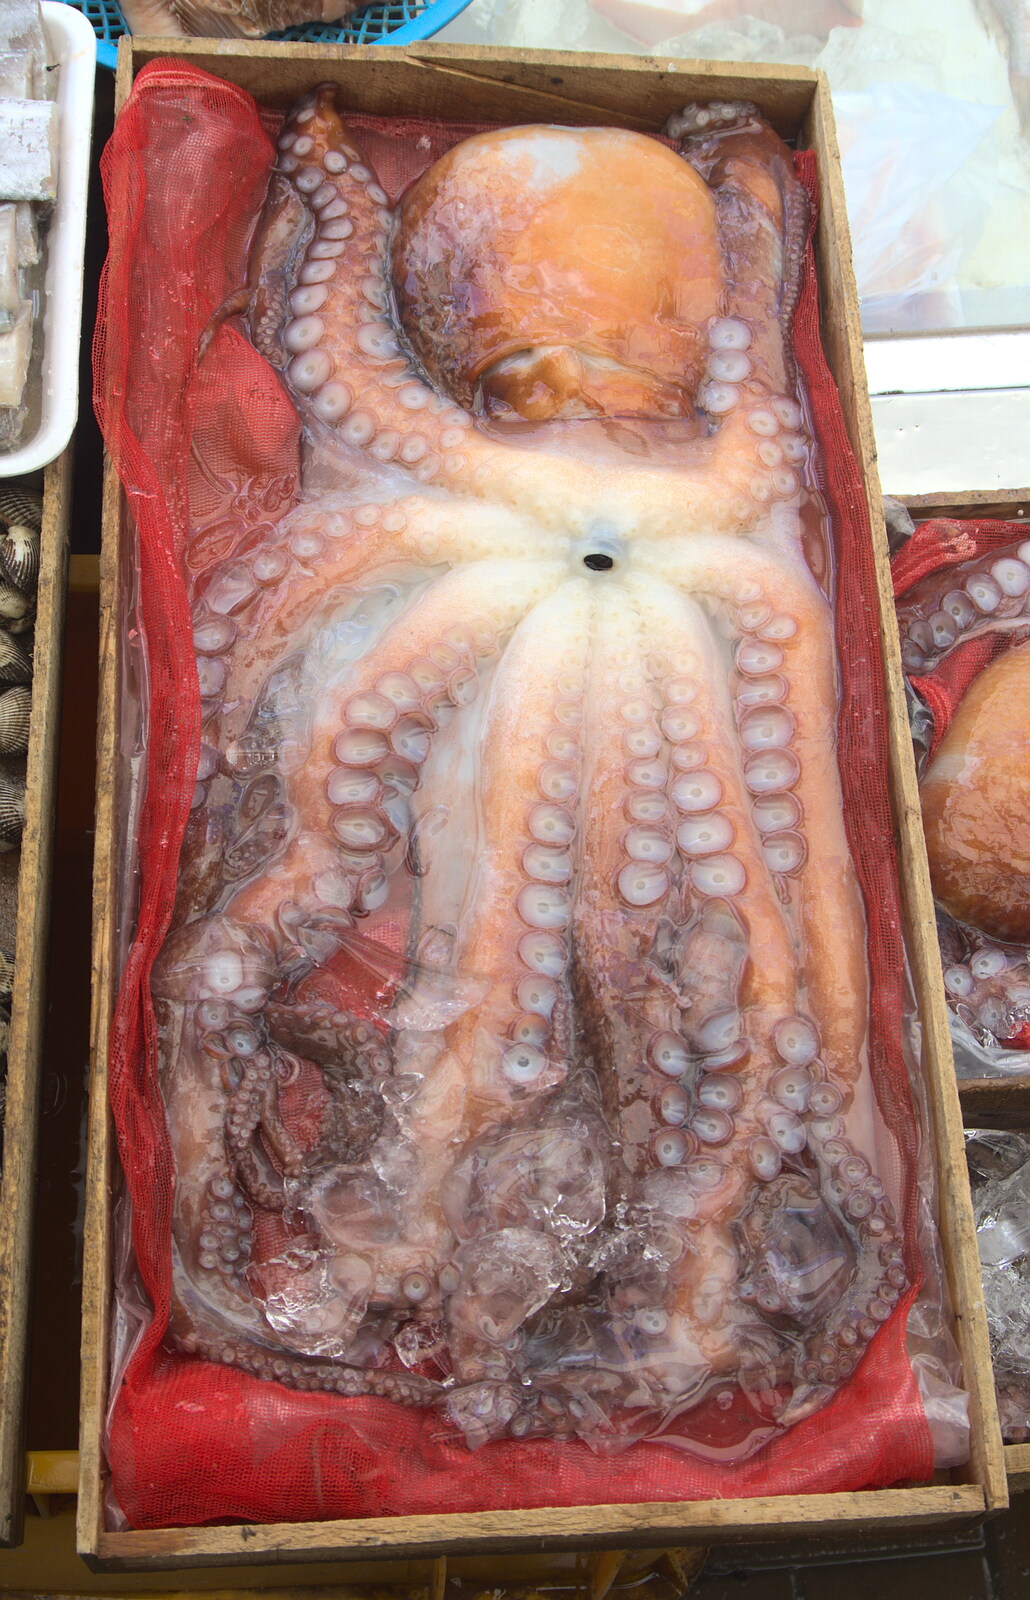 An octopus looks like a facehugger from Alien from Seomun Market, Daegu, South Korea - 1st July 2012